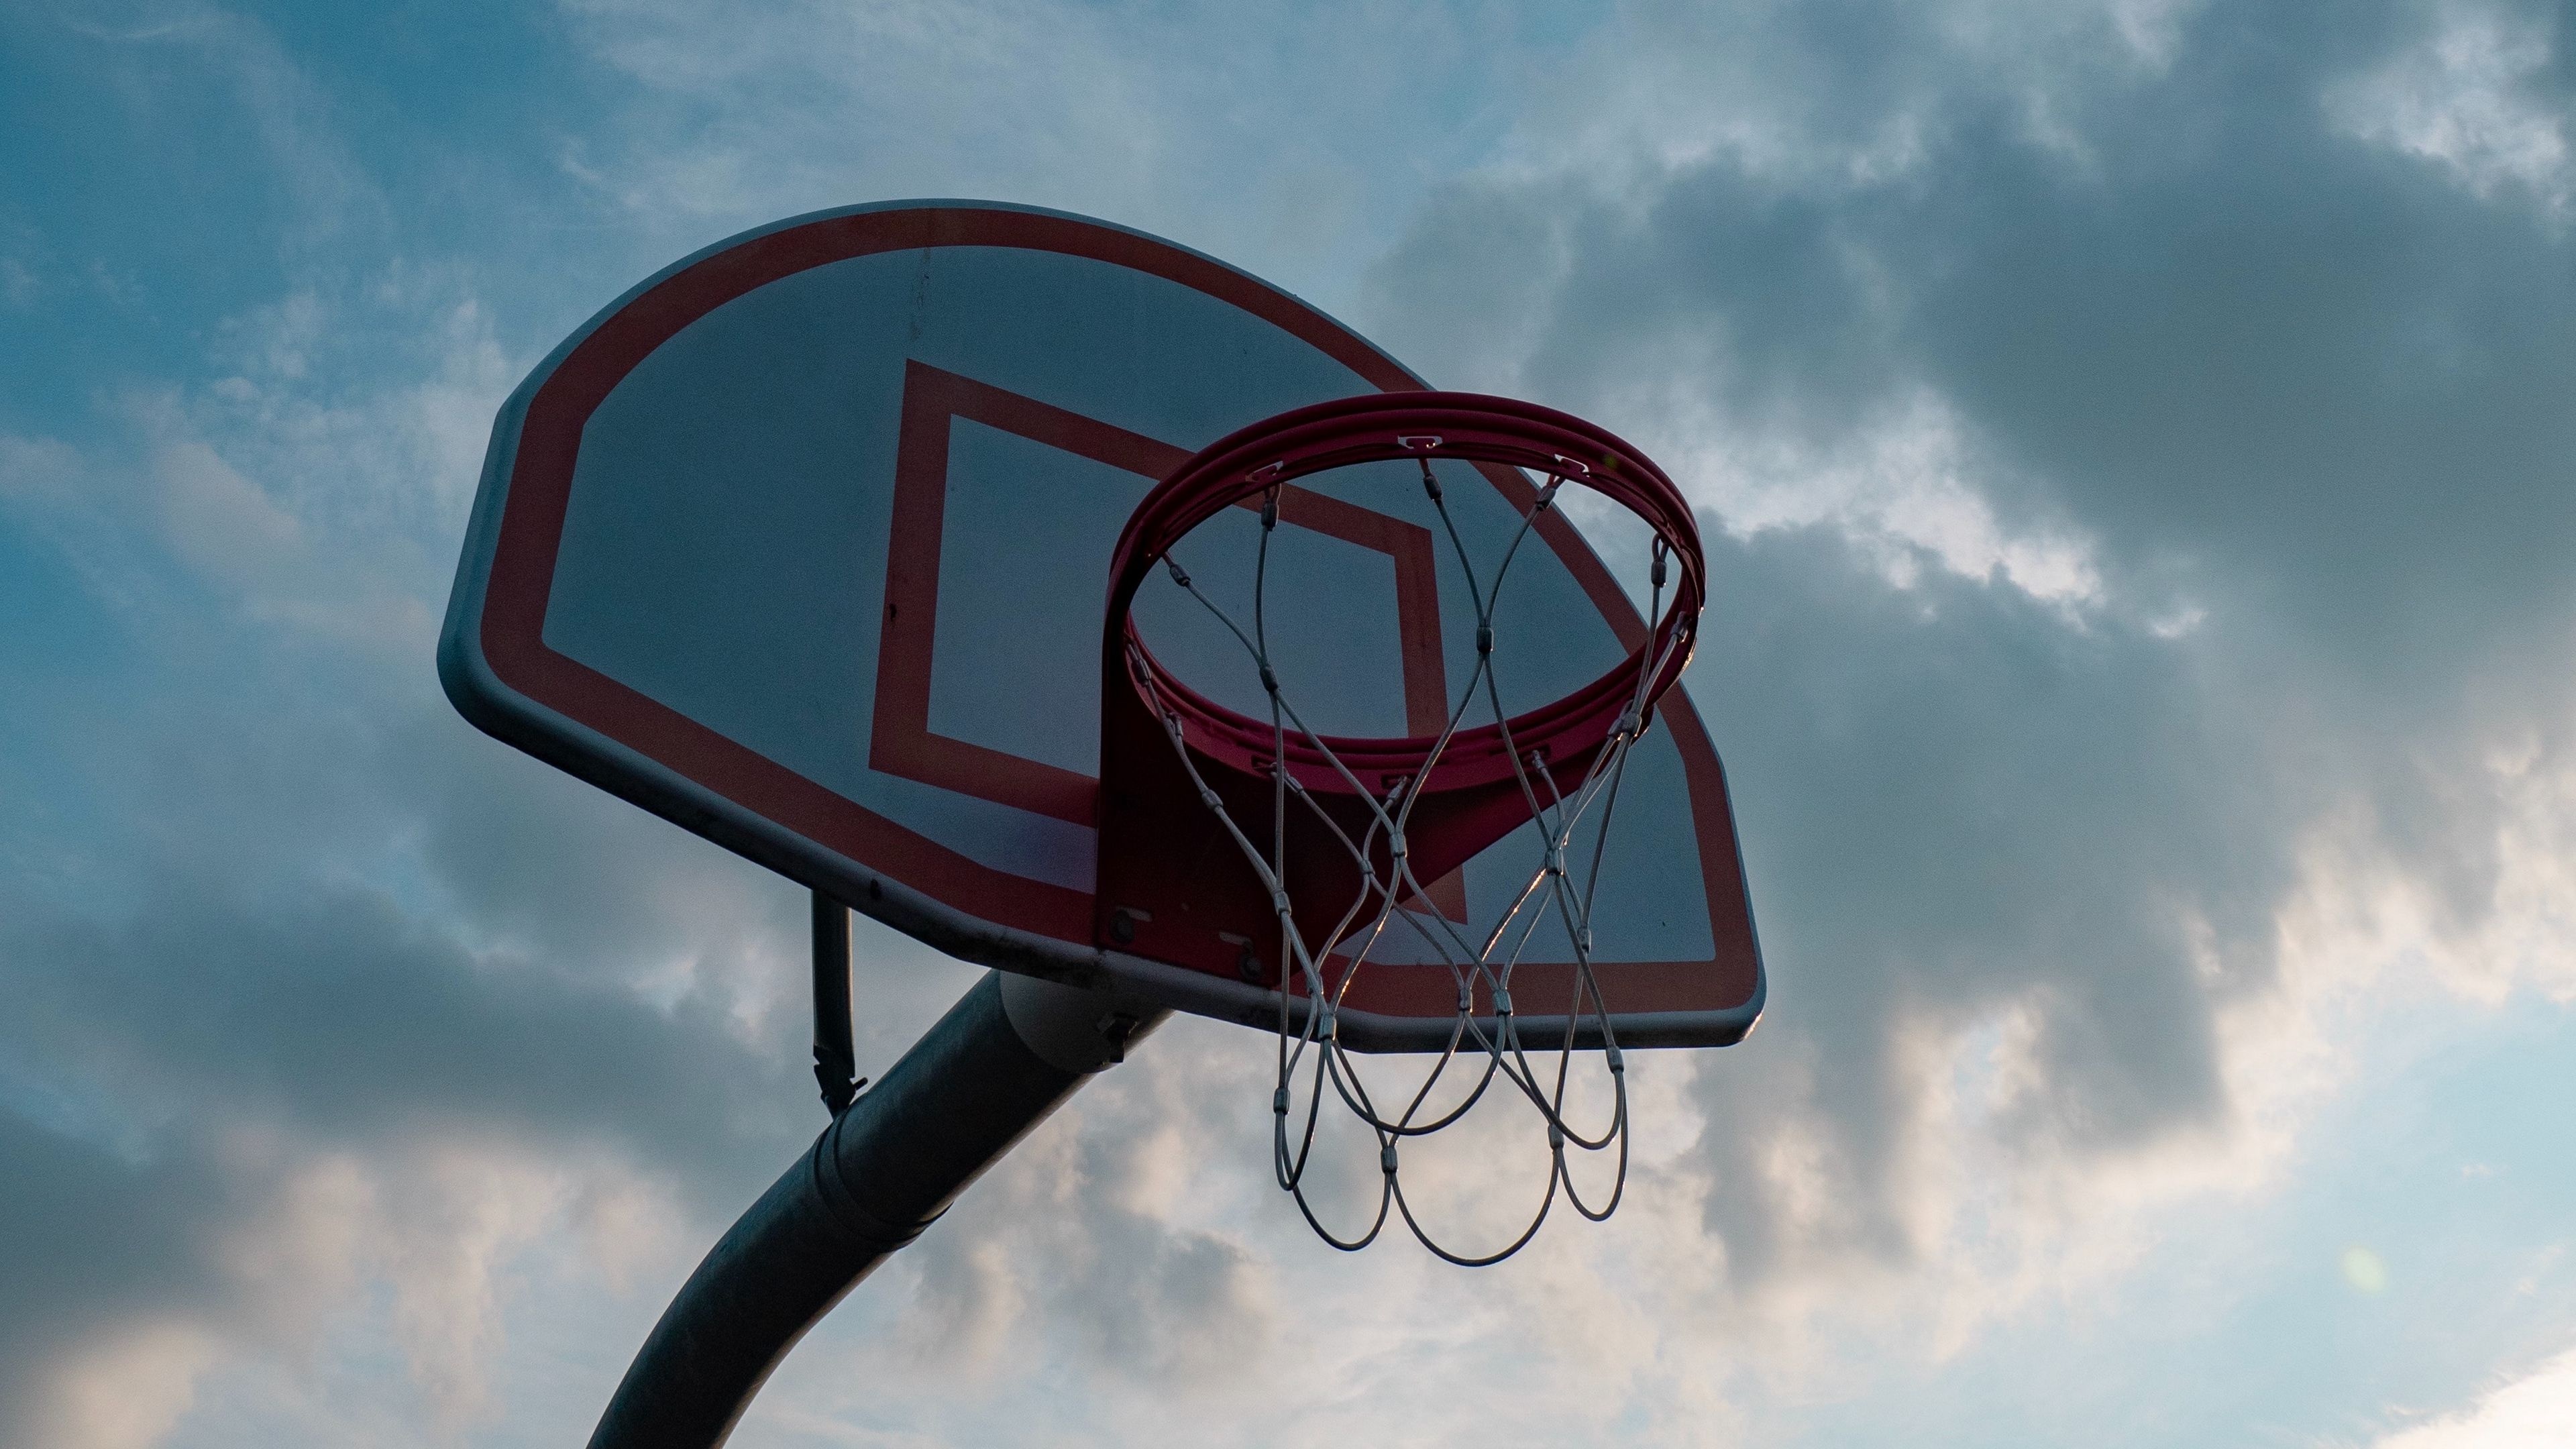 Streetball: Street basketball basket, New York City outdoor court. 3840x2160 4K Background.